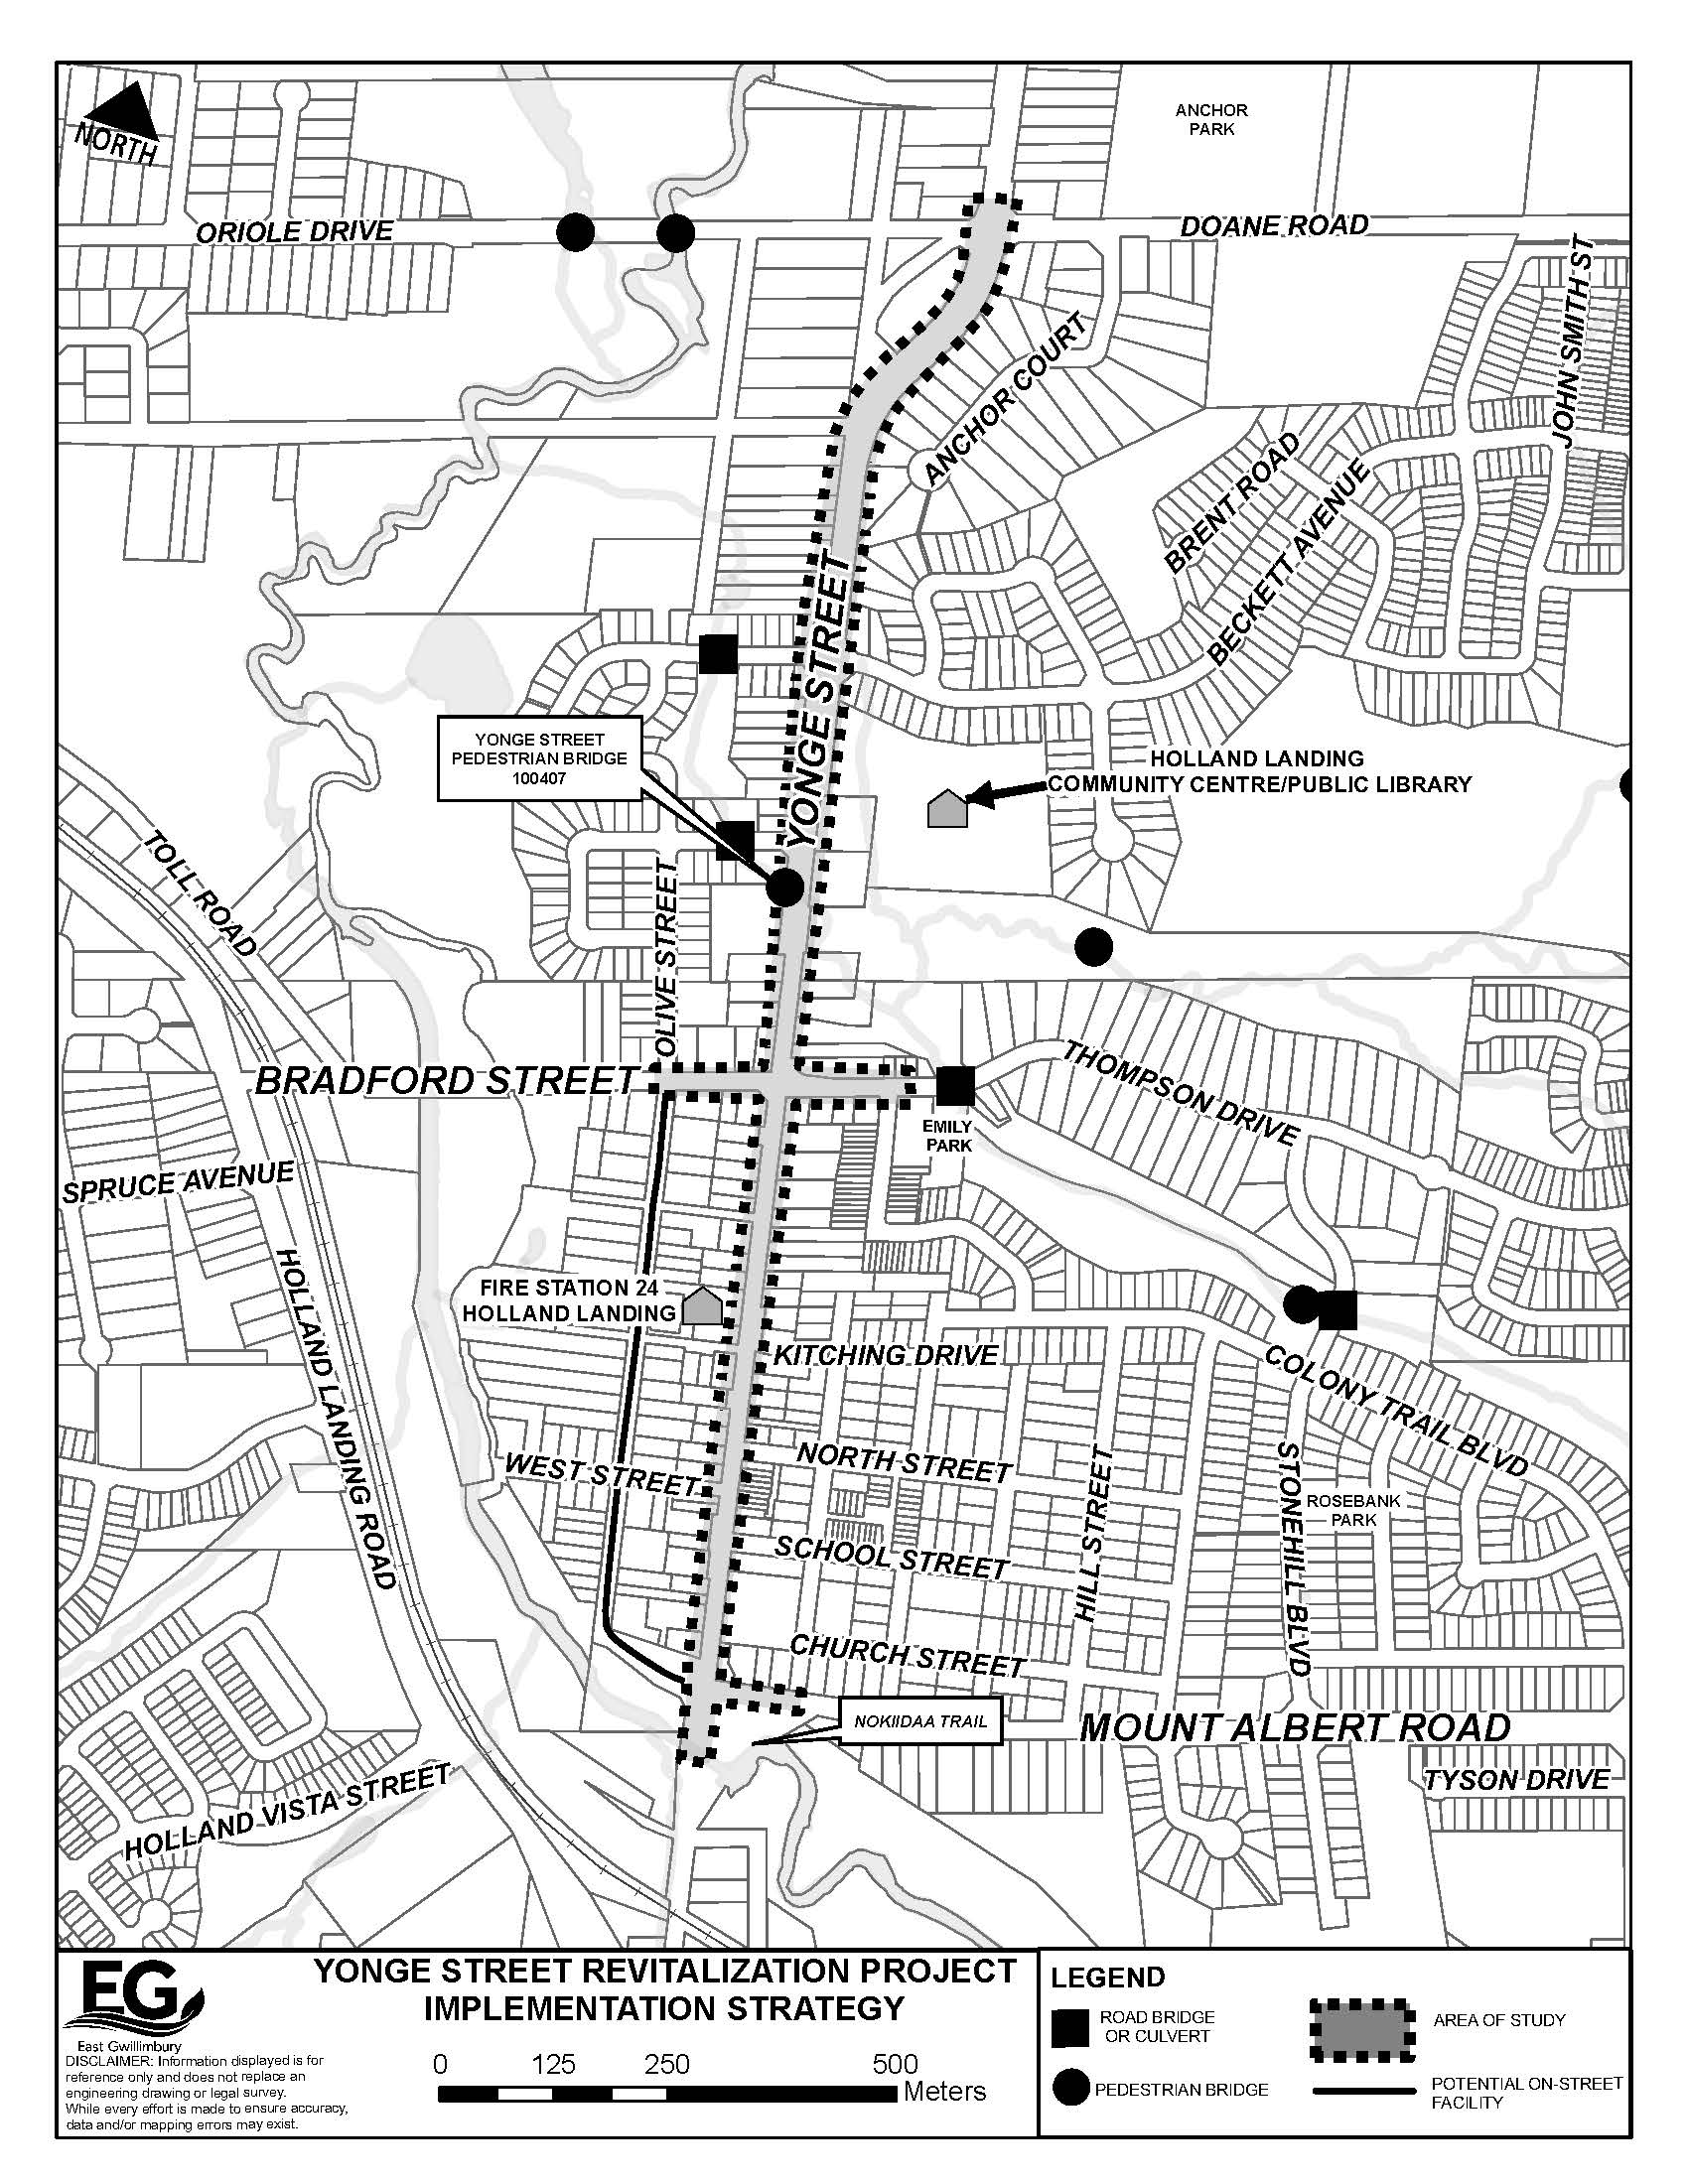 Map of Yonge Street showing revitalization plans